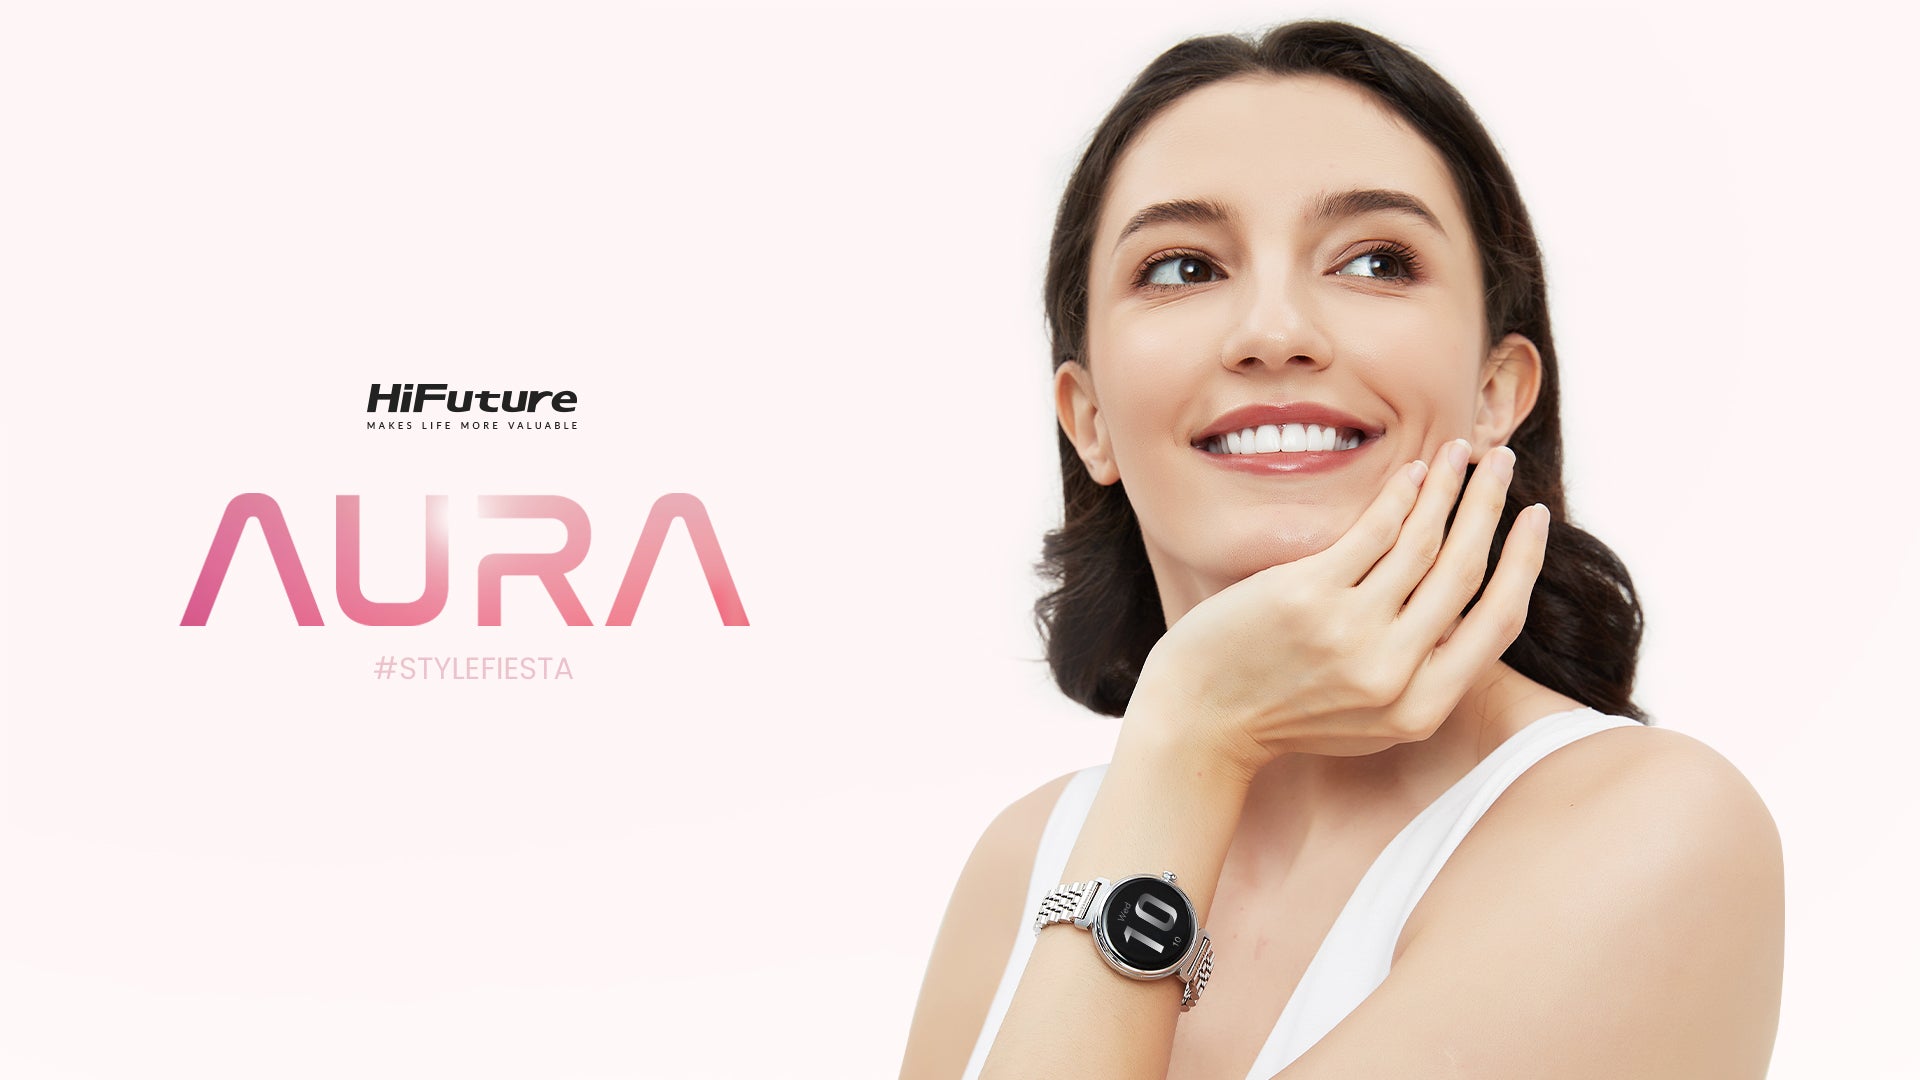 Aura: Classic, Aesthetic & Sleek Design Smartwatch for the Modern Woman